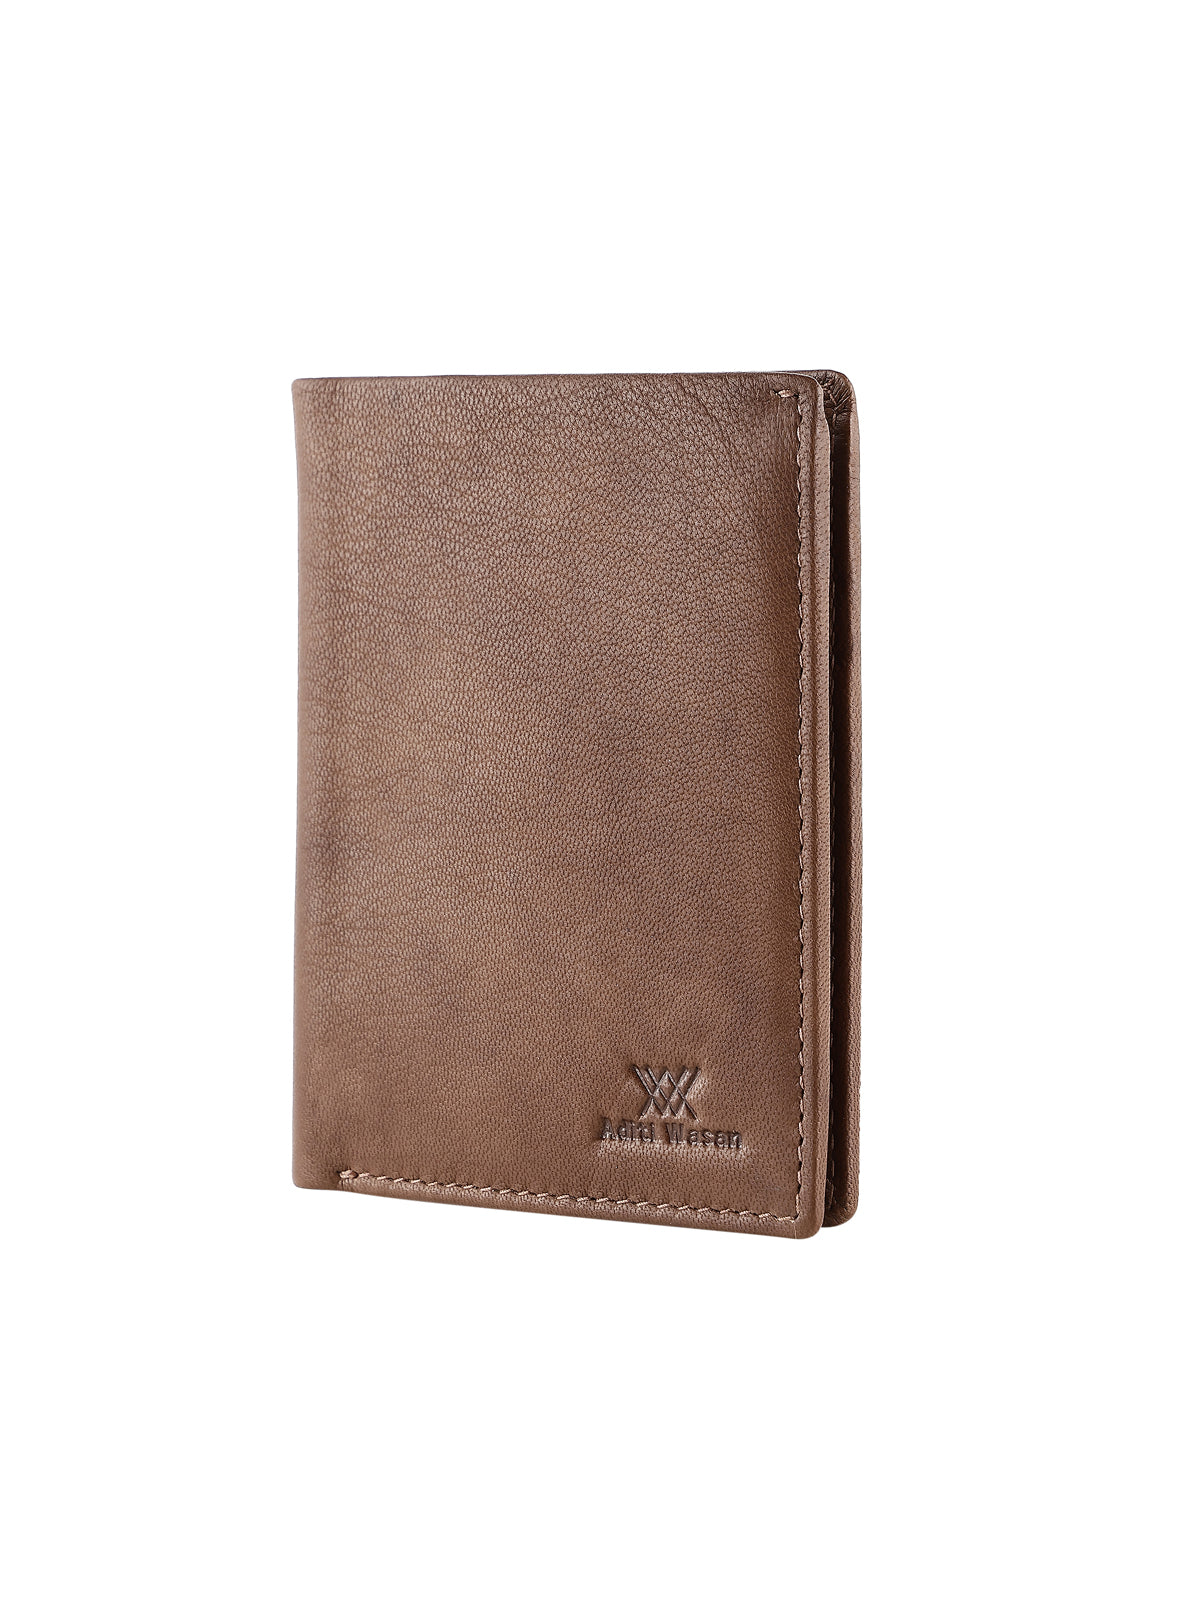 Genuine Leather Slim Wallet Cardholder with 6 Card Slots and 1 Keyholder Slot - Brown